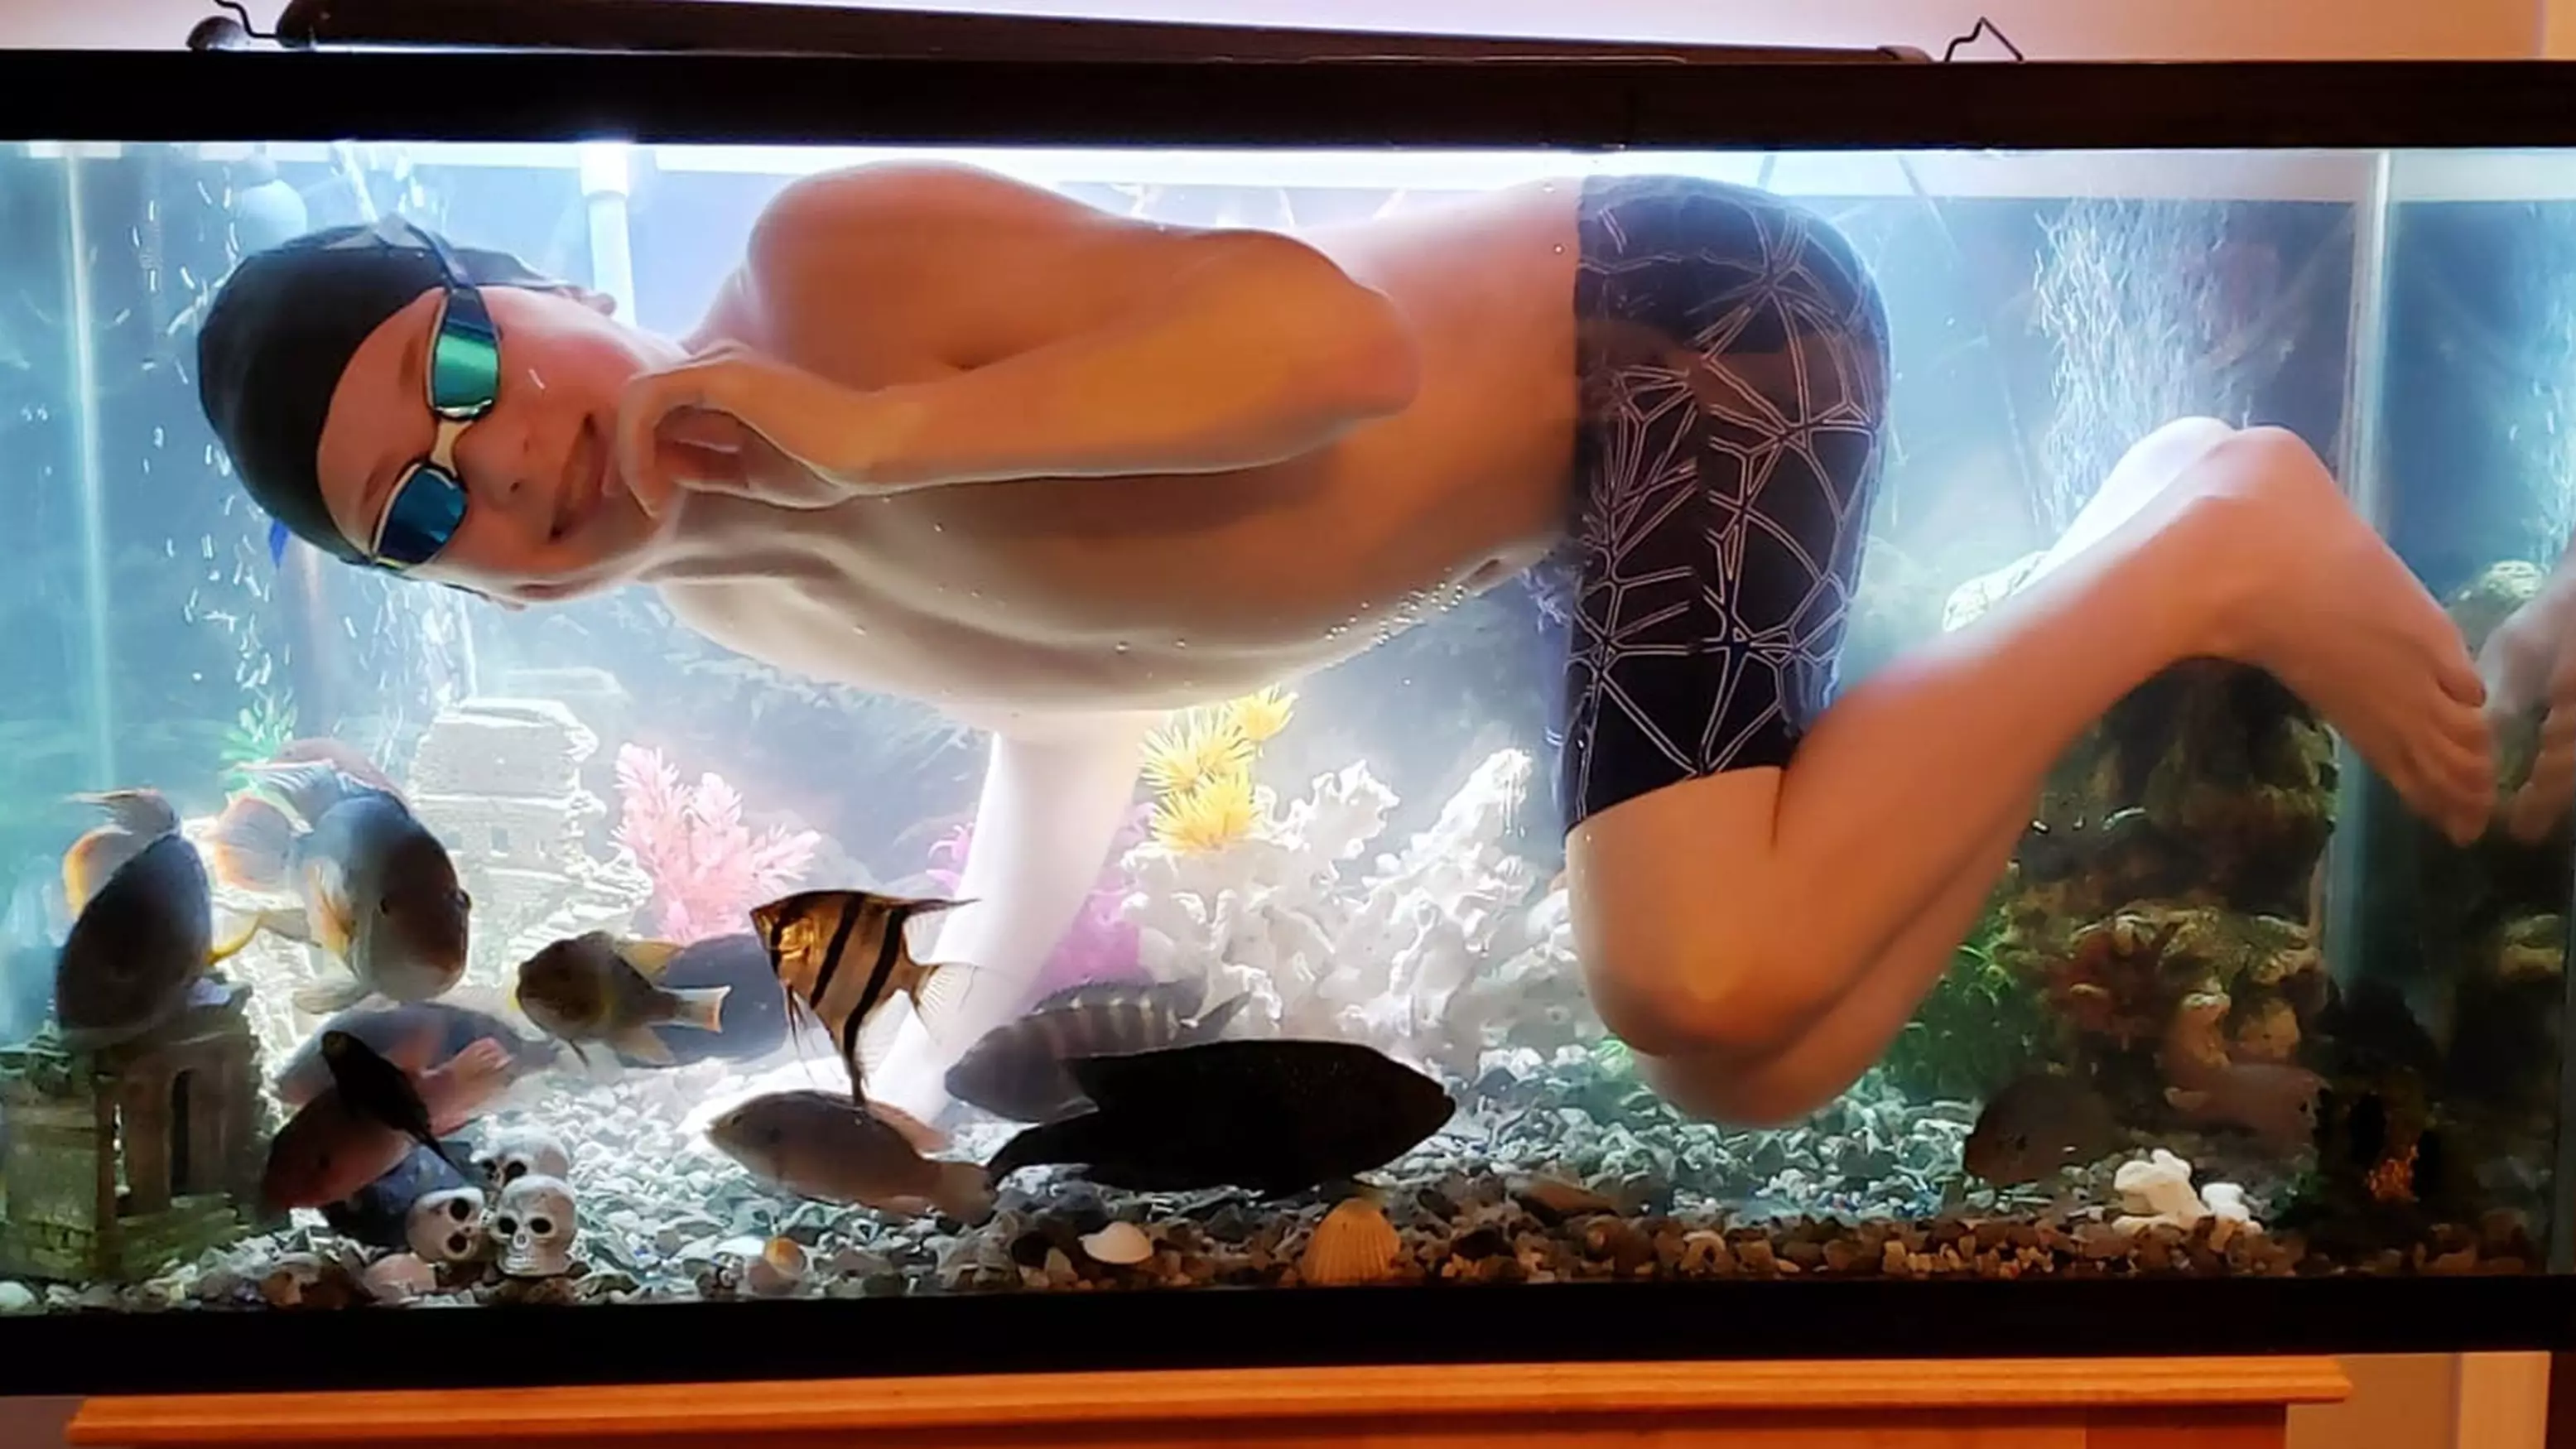 Teen Who 'Misses Swimming' During Pool's Coronavirus Closure Takes Dip In Dad's Fish Tank